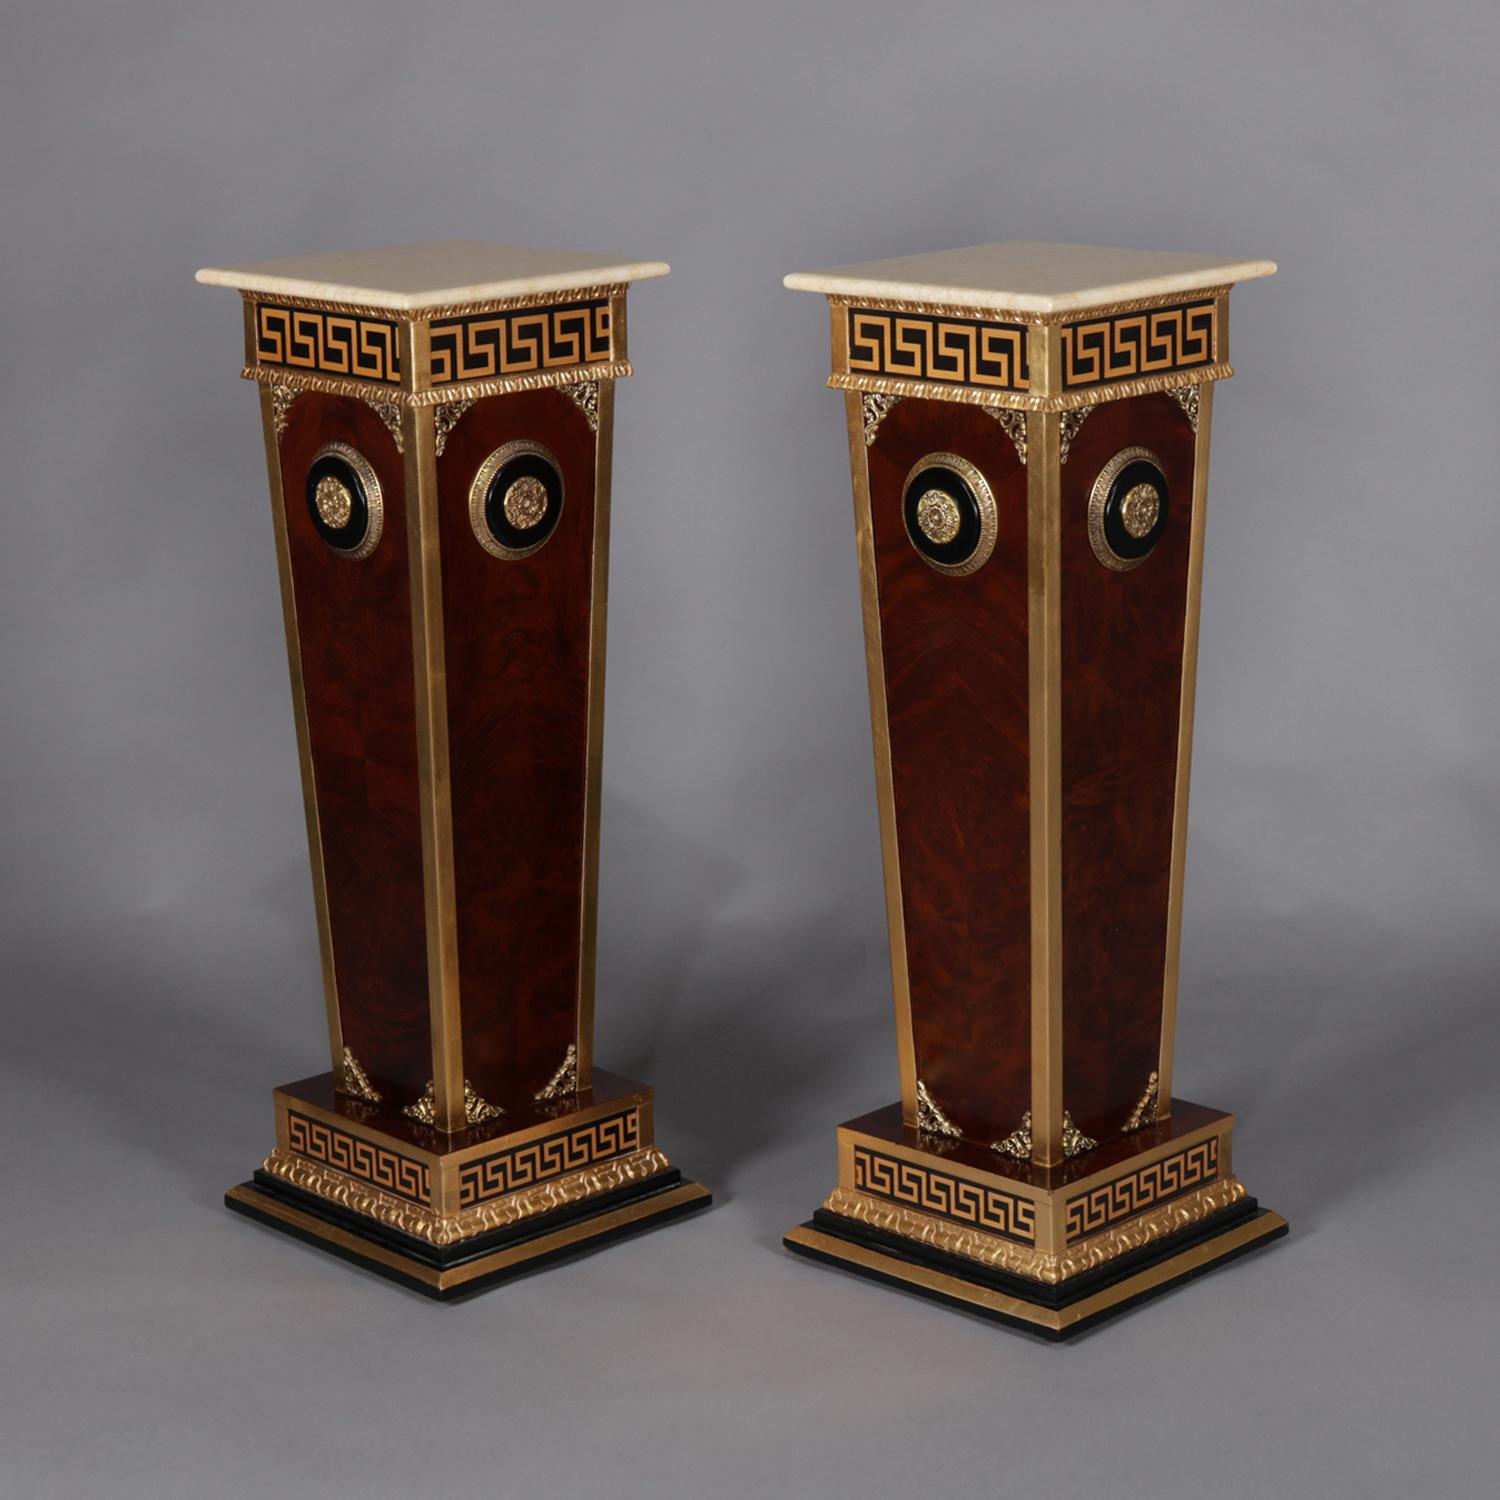 Pair of Matching Neoclassical Mahogany and Ormolu Sculpture Pedestals (Neoklassisch)